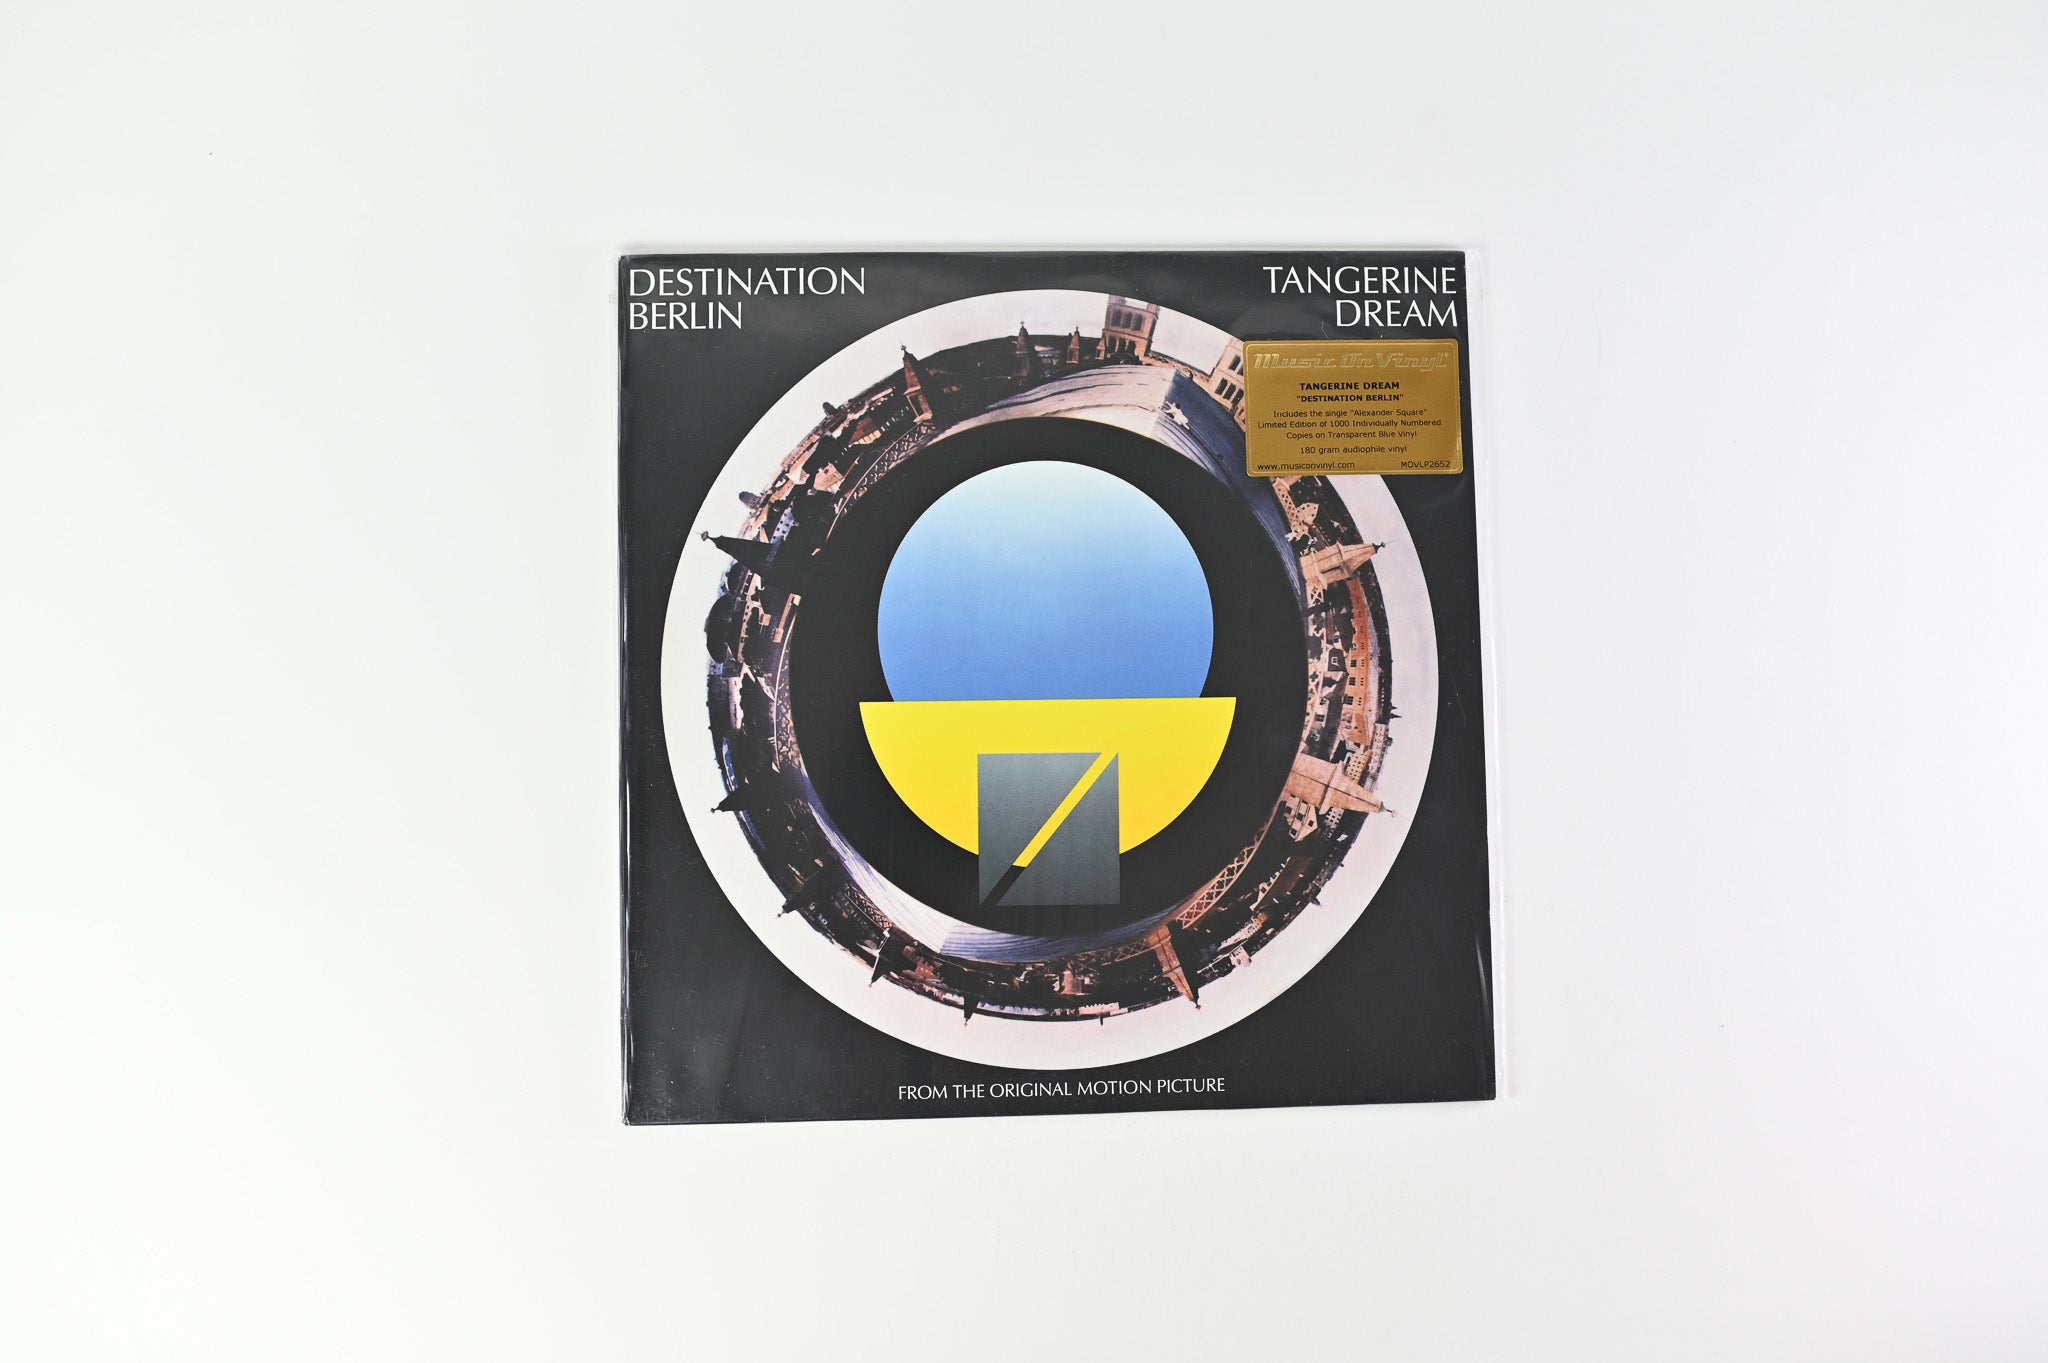 Tangerine Dream - Destination Berlin (From The Original Motion Picture) on Music On Vinyl Numbered Reissue Transparent Blue Vinyl